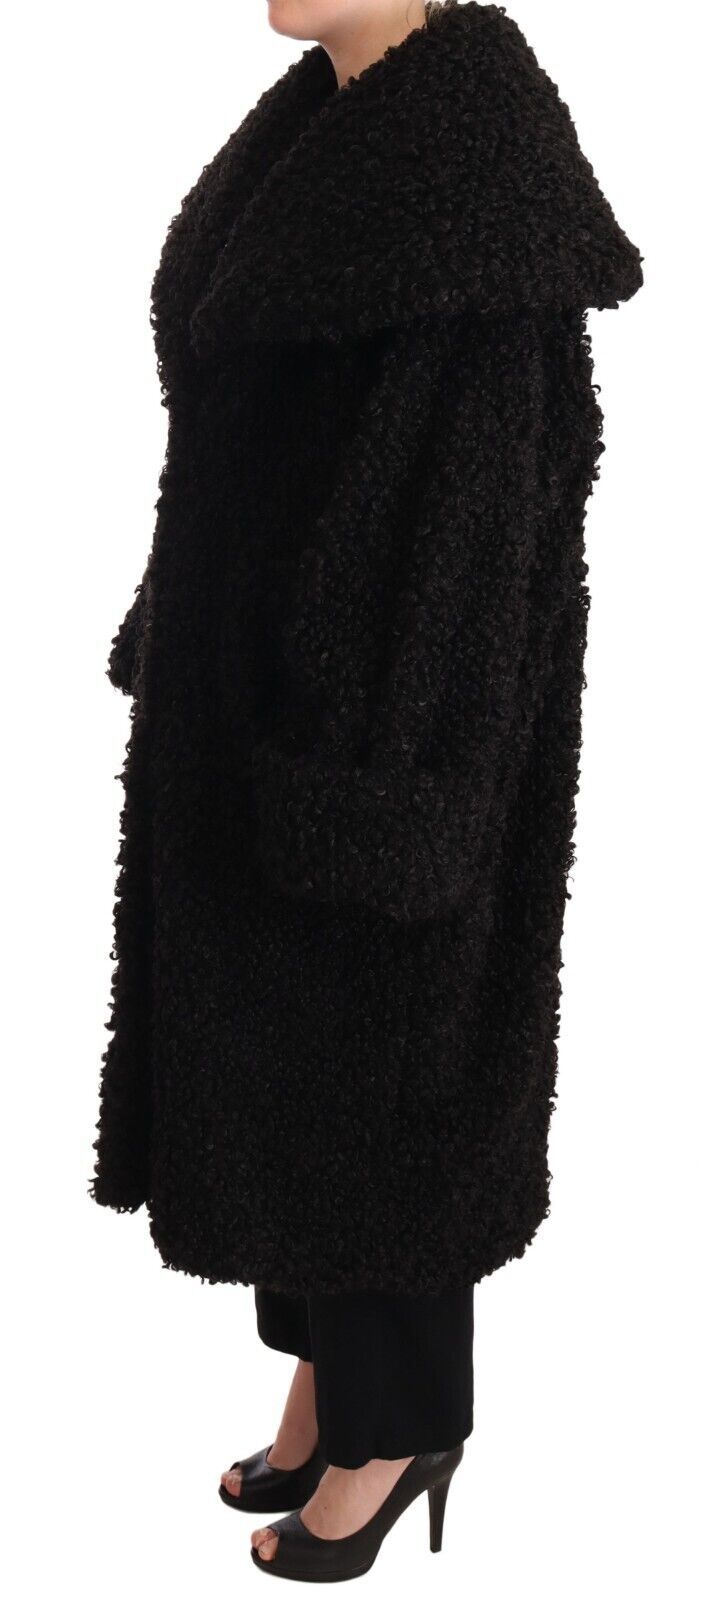 Dolce & Gabbana Elegant Black Fur Cape Trench Coat